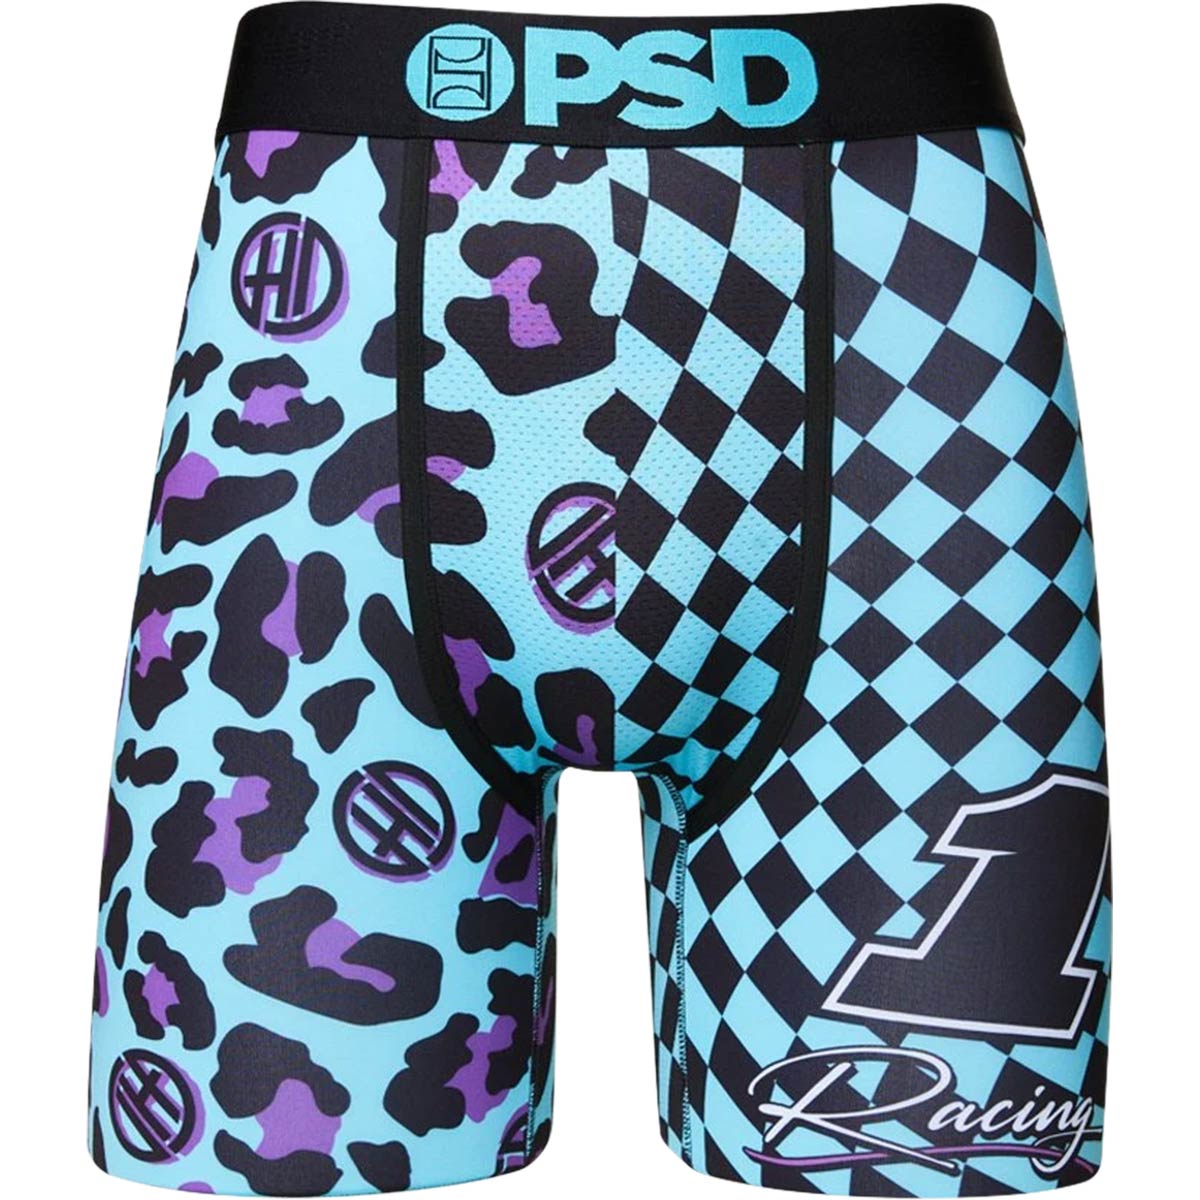 PSD Hailie Deegan Signature Collection Cheetah Check Underwear